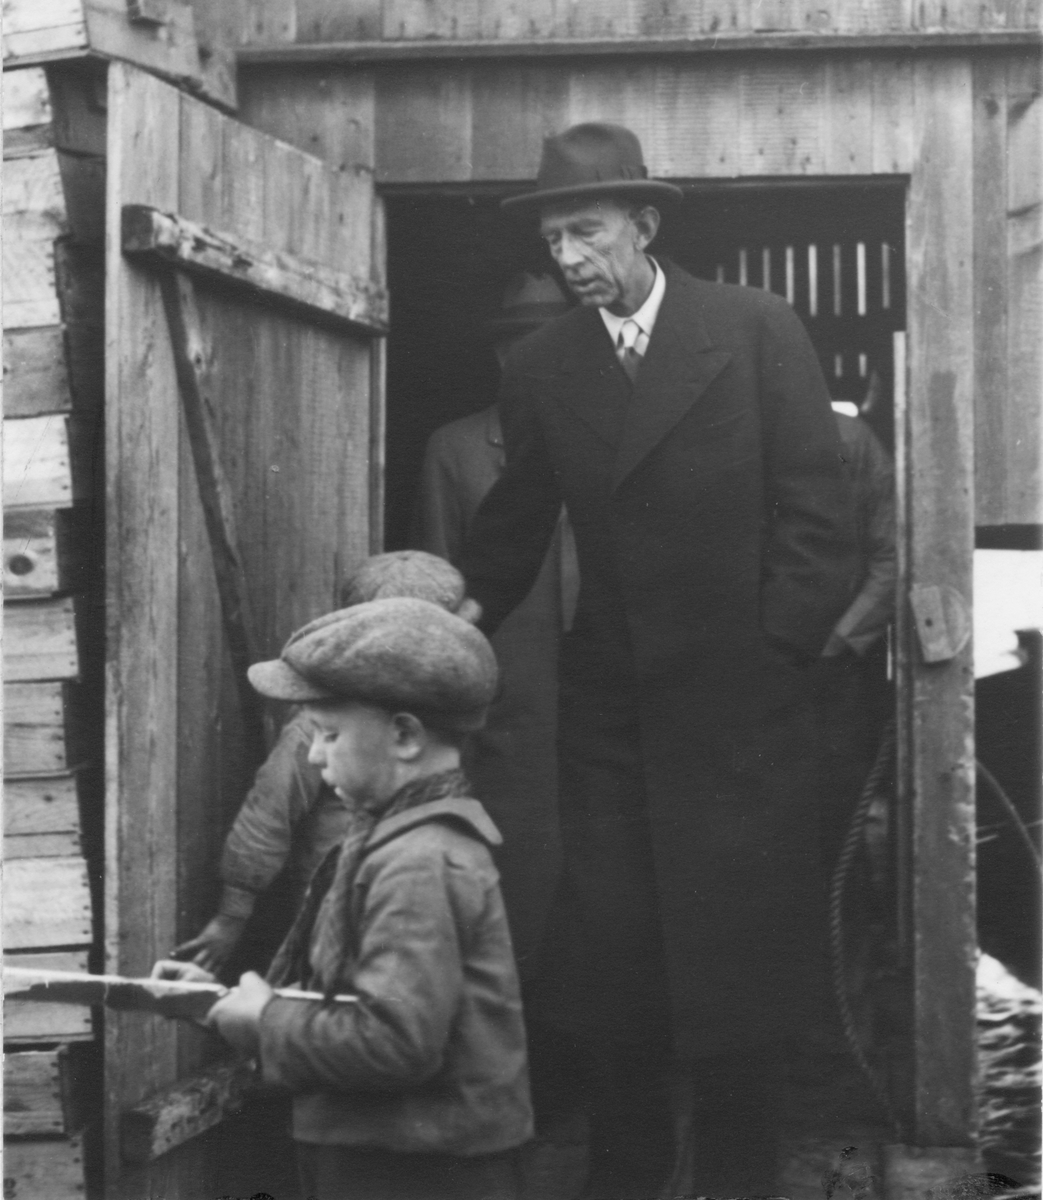 Prins Wilhelms besök på Utvalnäs 1938.

